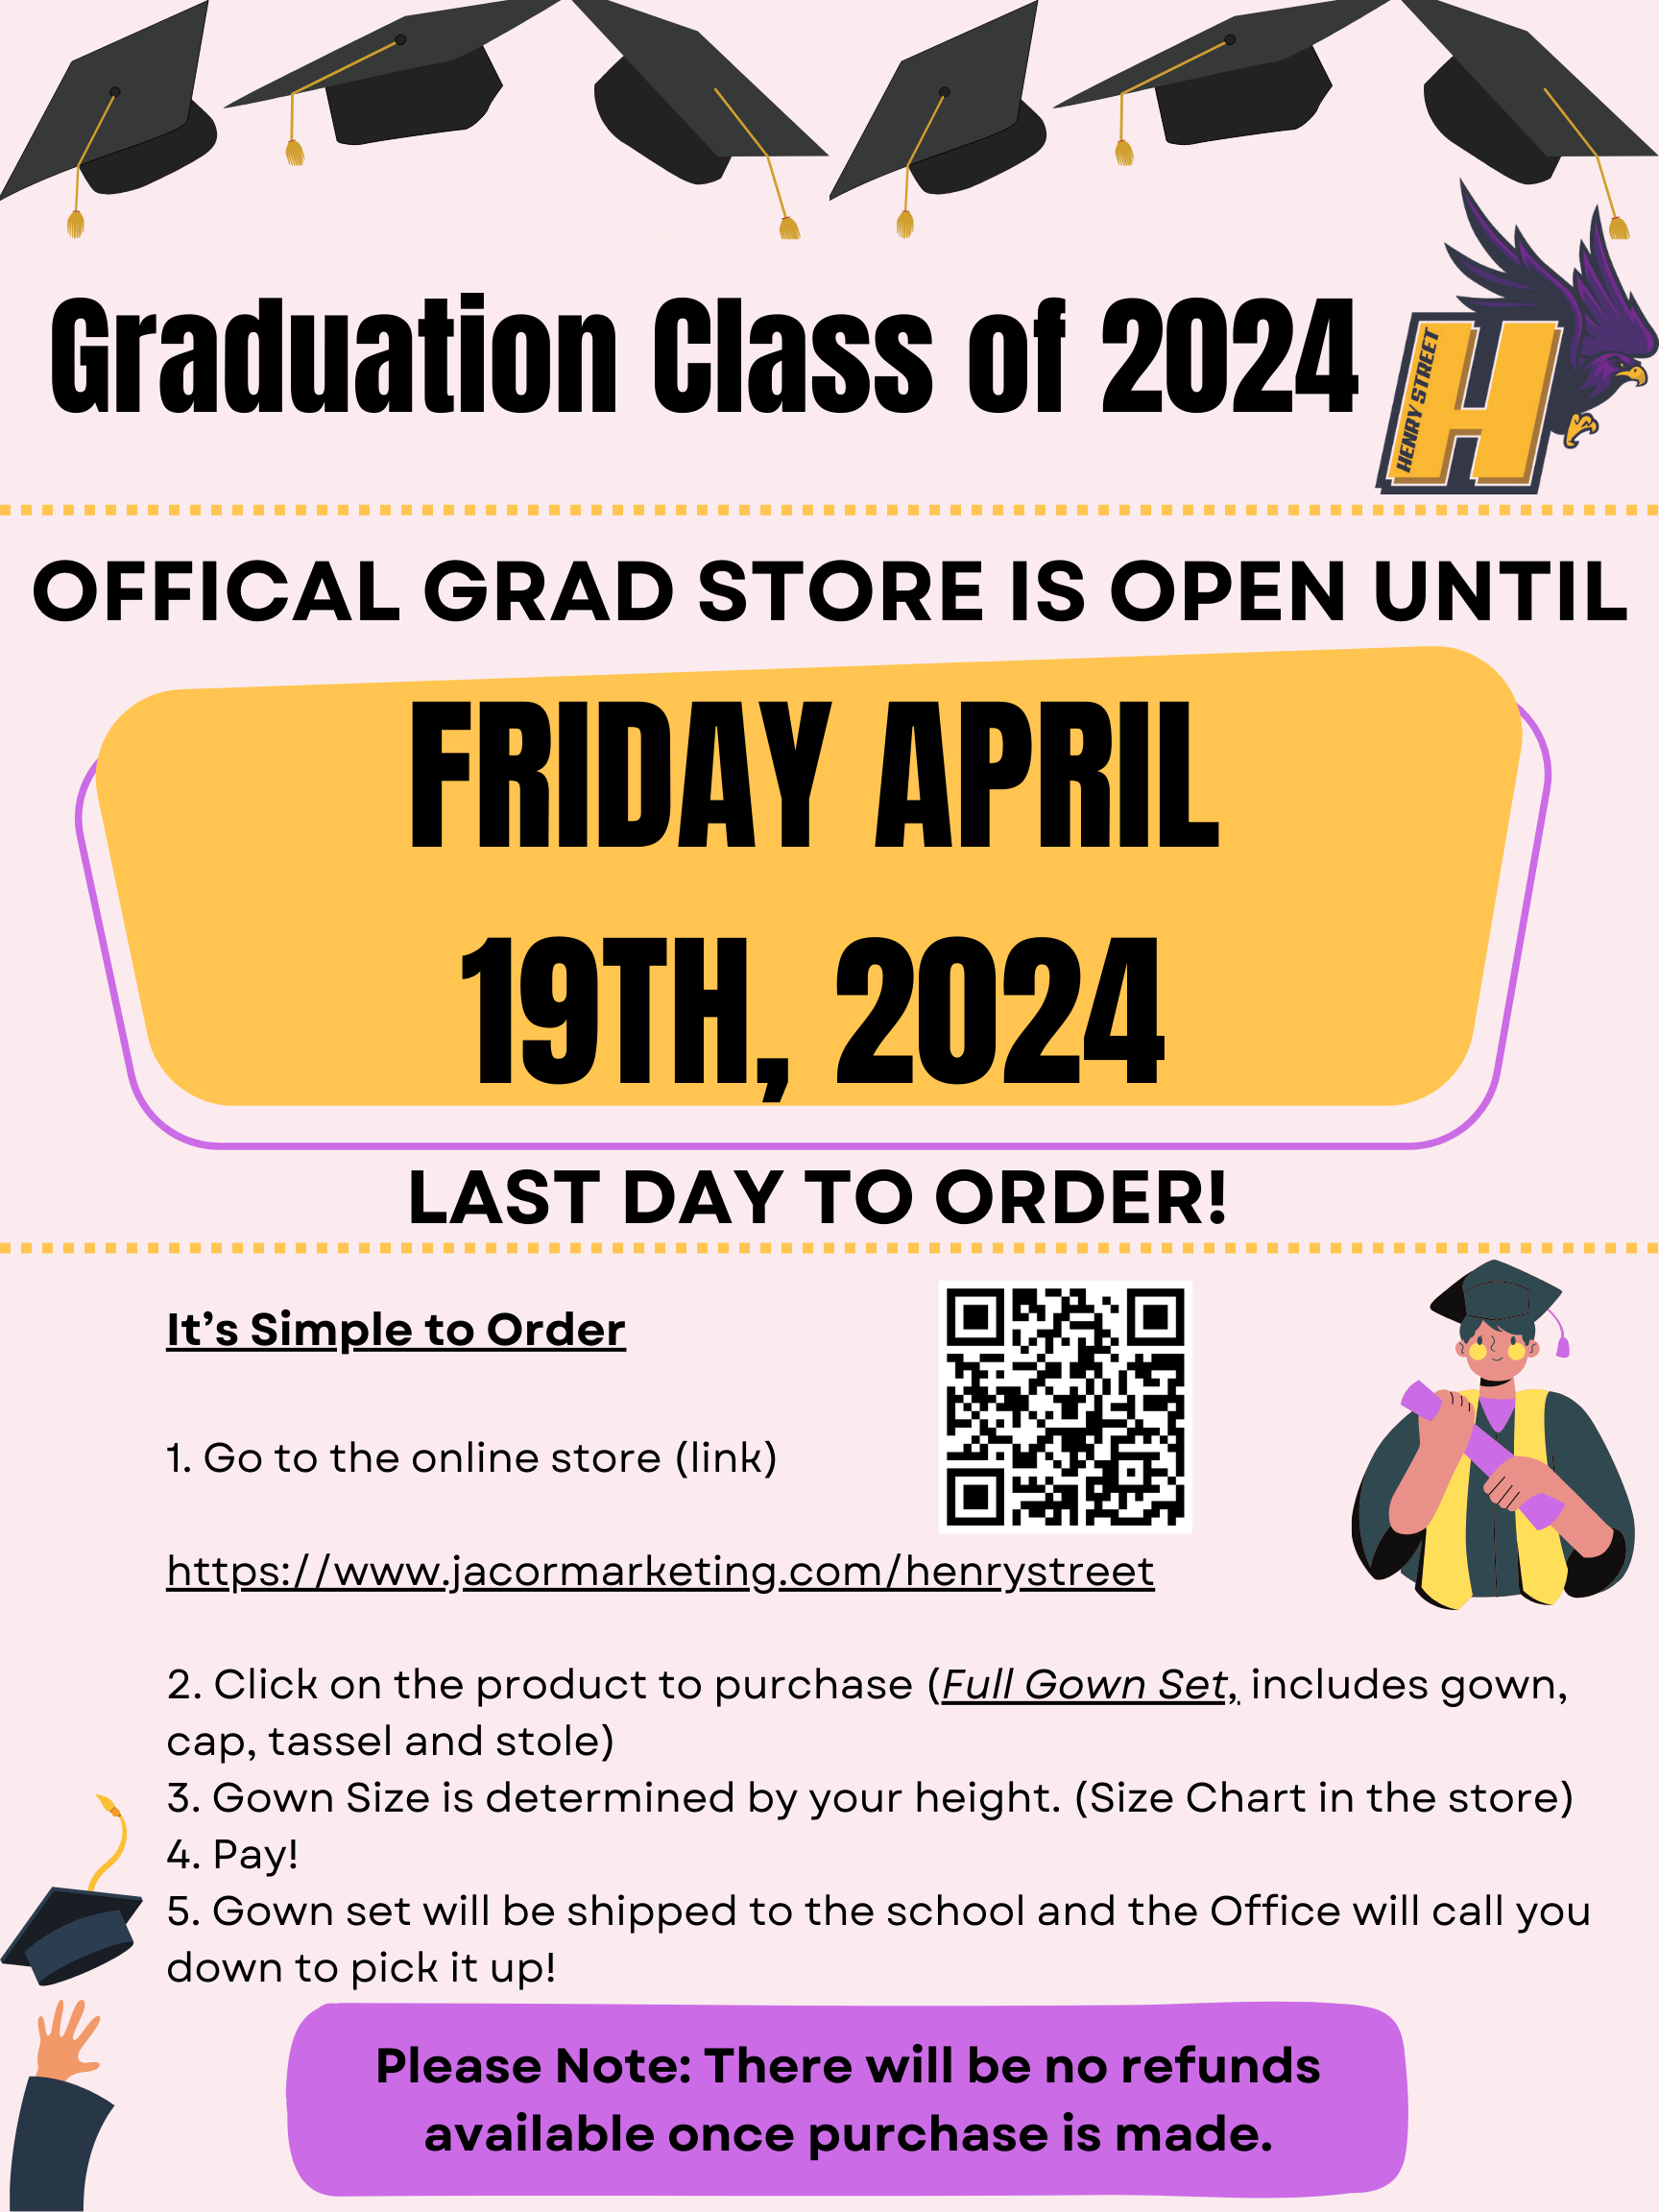 Graduation caps on a background